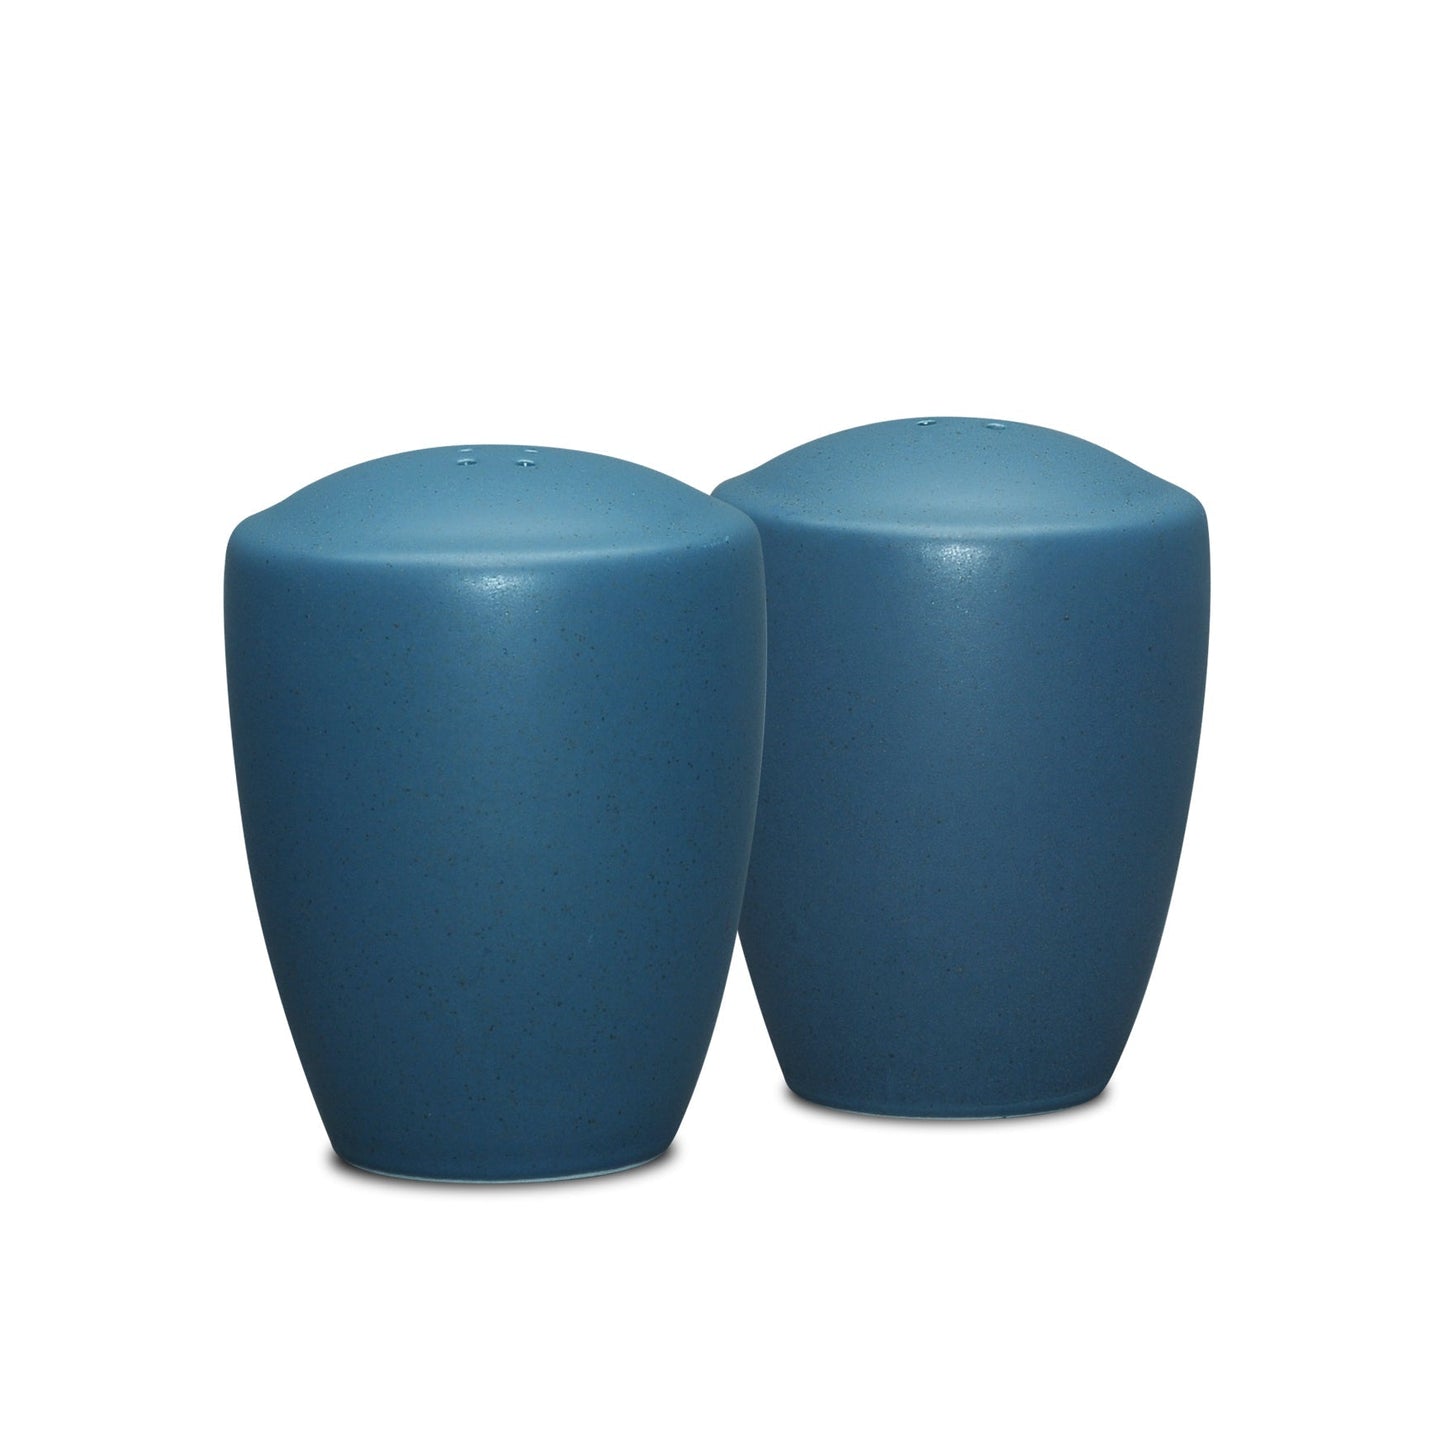 Noritake Blue Colorwave Curve Dinnerware Set